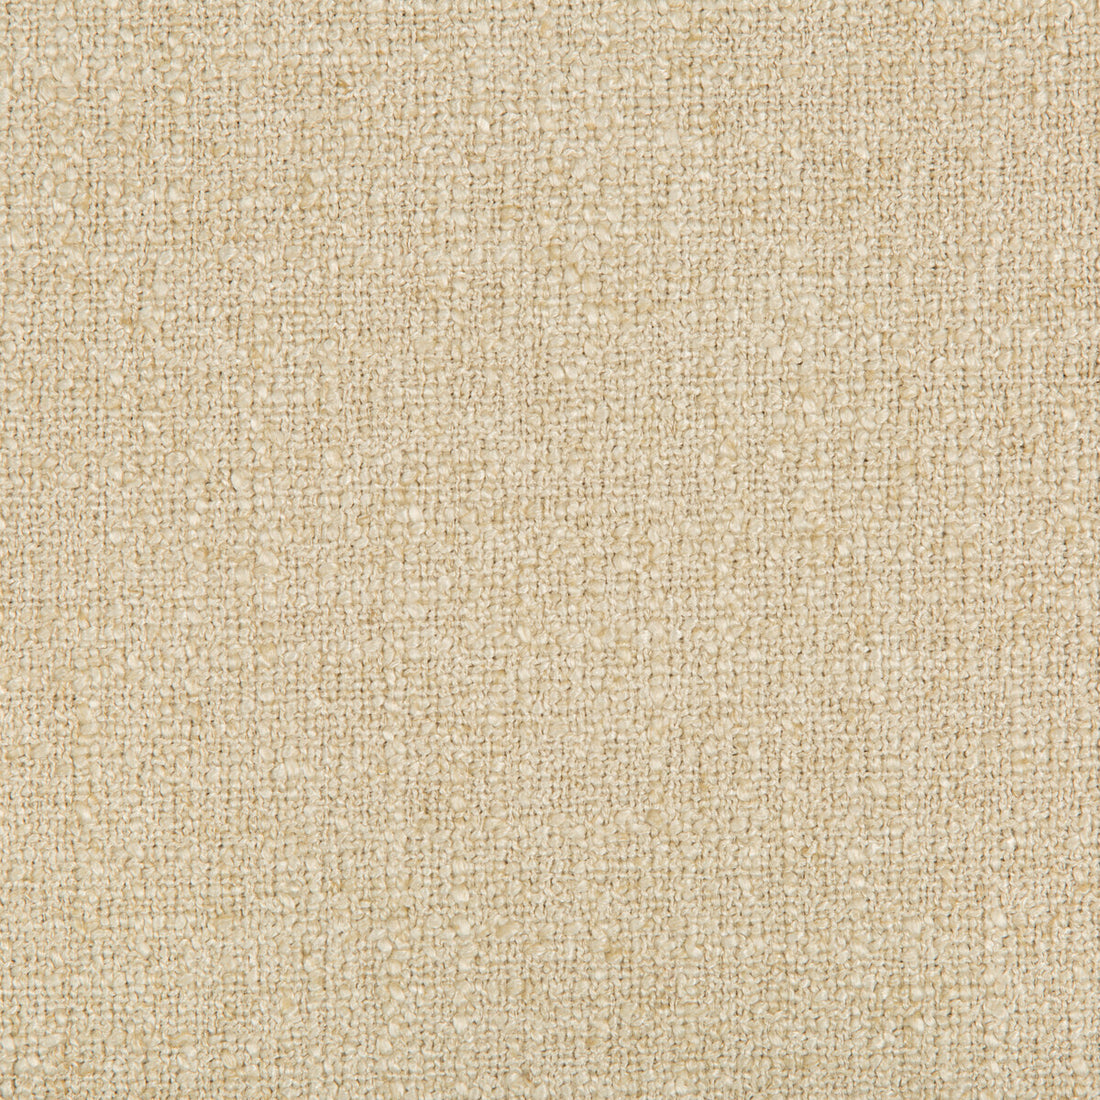 Kravet Smart fabric in 35147-16 color - pattern 35147.16.0 - by Kravet Smart